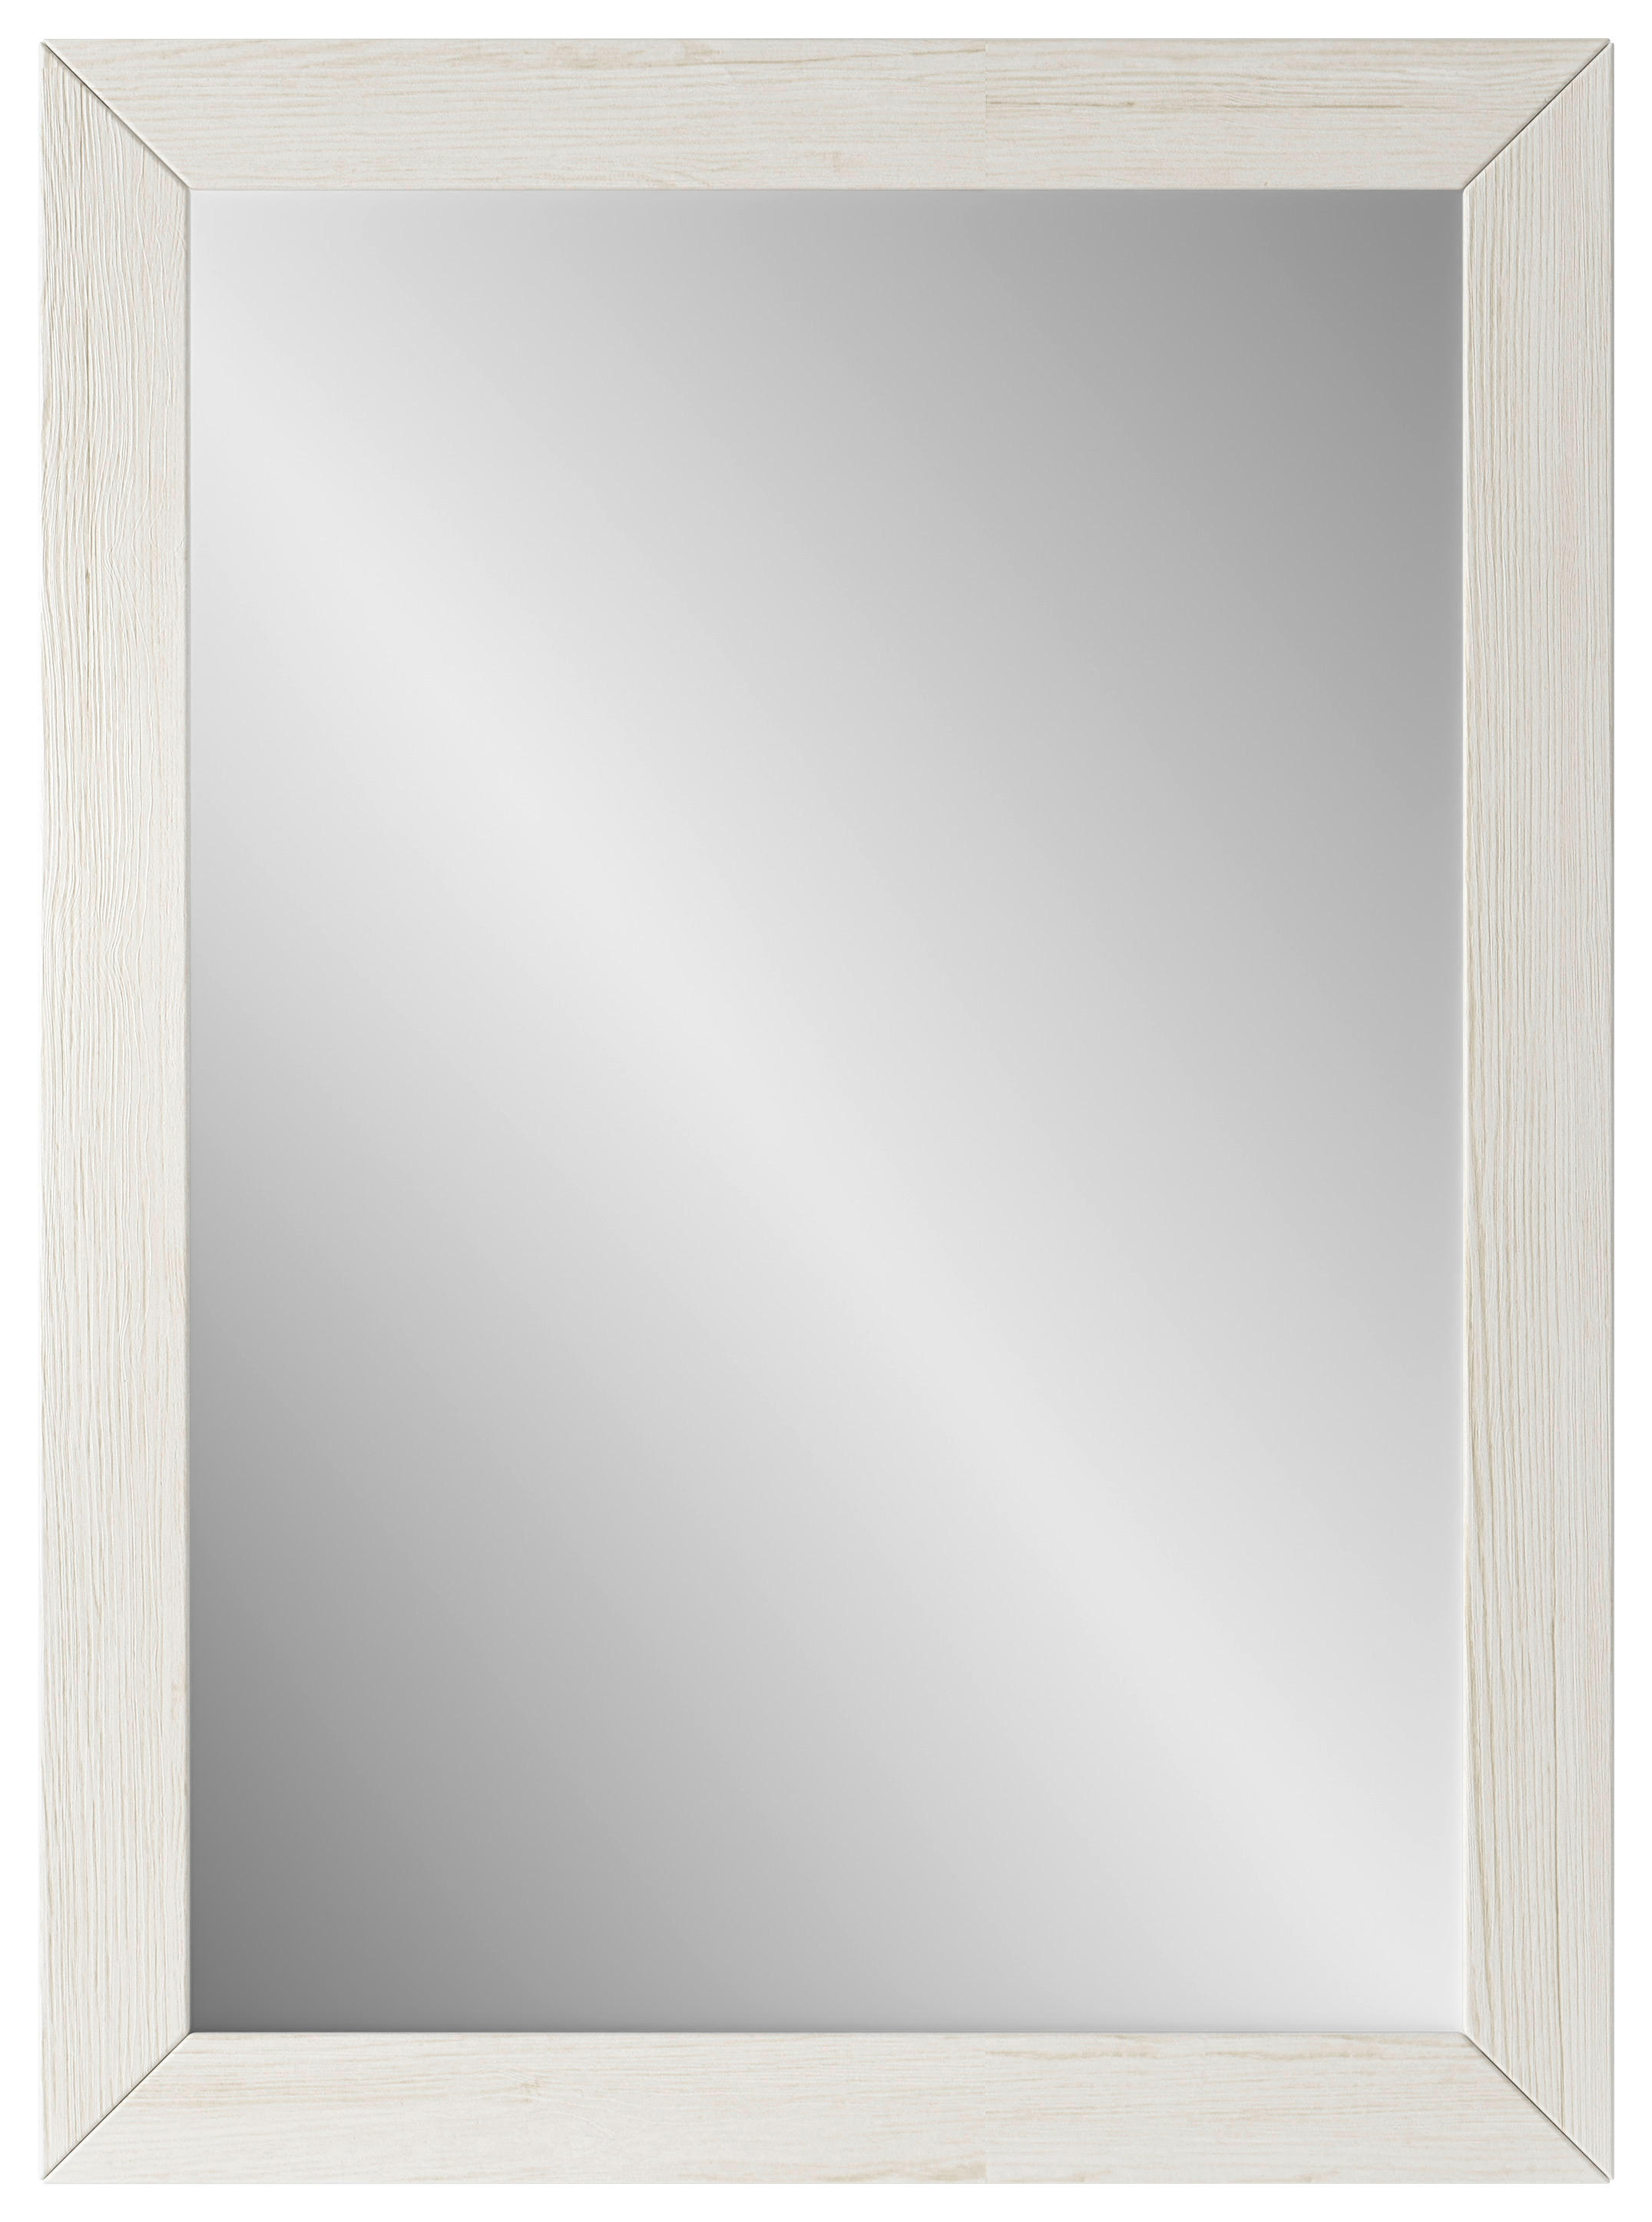 WANDSPIEGEL 100/70/2 cm    - Weiß/Pinienfarben, Basics, Glas/Holzwerkstoff (100/70/2cm) - SetOne by Musterring